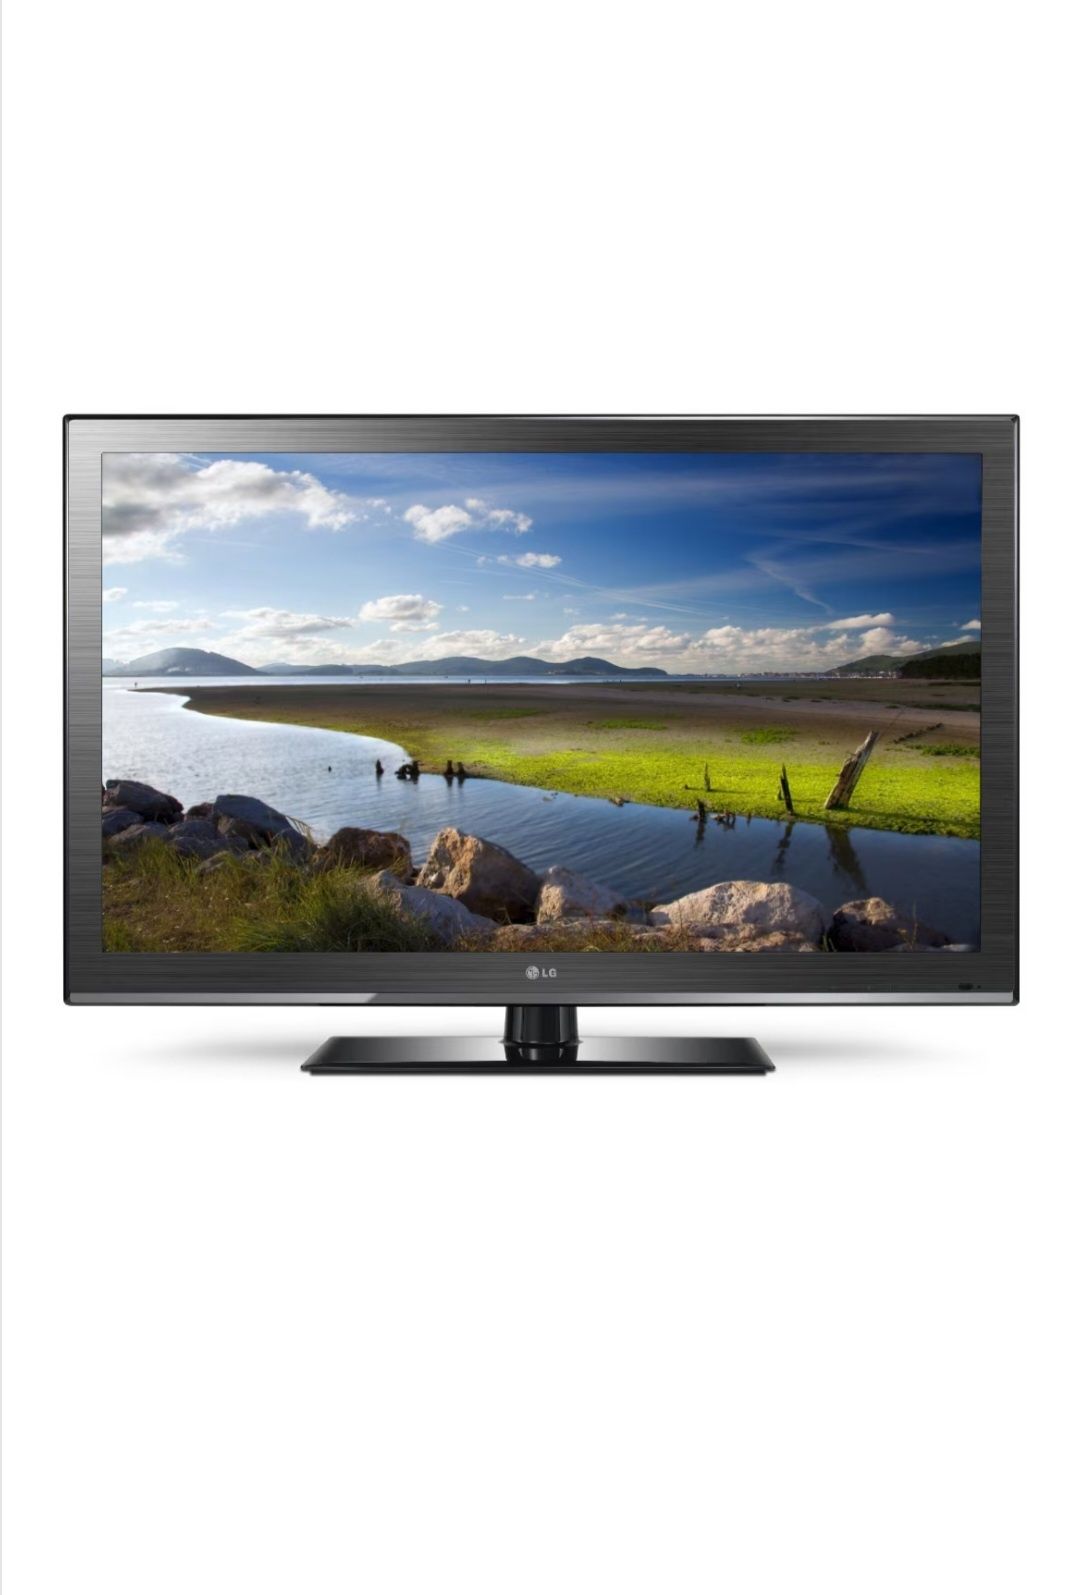 Vand Televizor LG HD - 220 lei